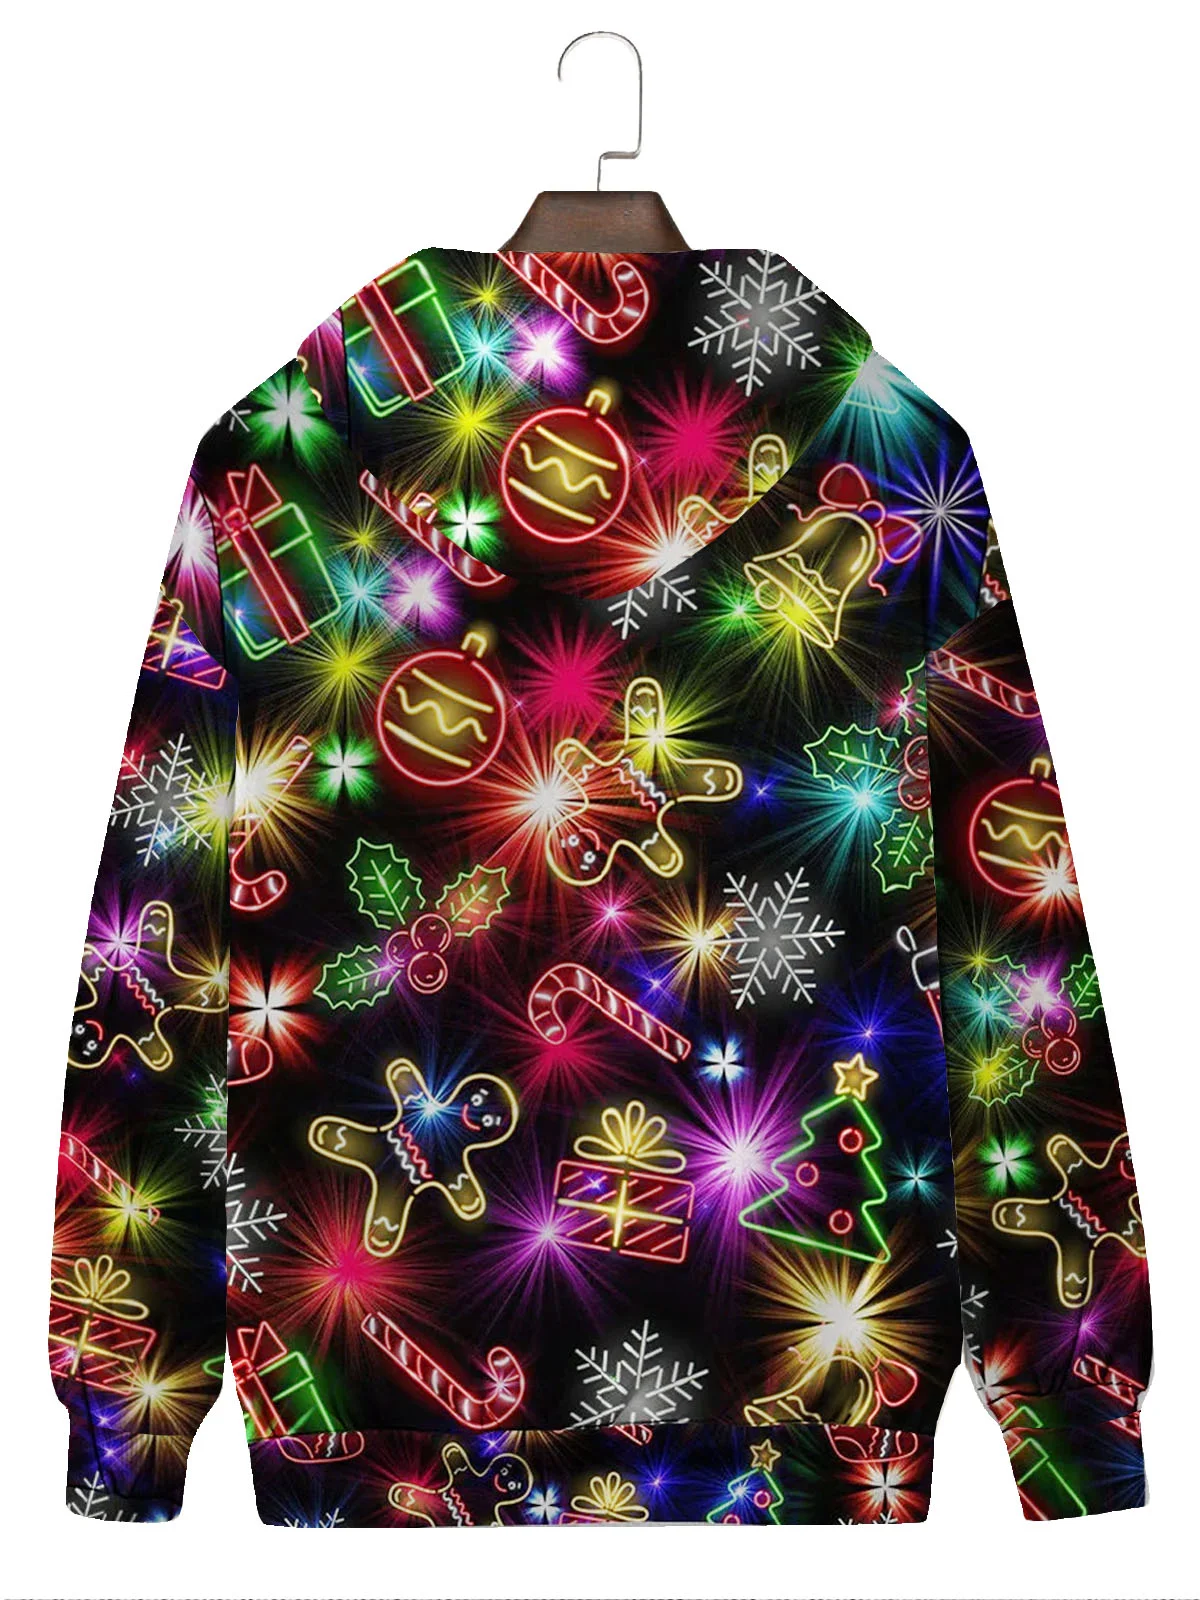 Royaura Christmas Holiday Black Men's Drawstring Hoodies Christmas Lights Fun Pullover Stretch Plus Size Sports Sweatshirts